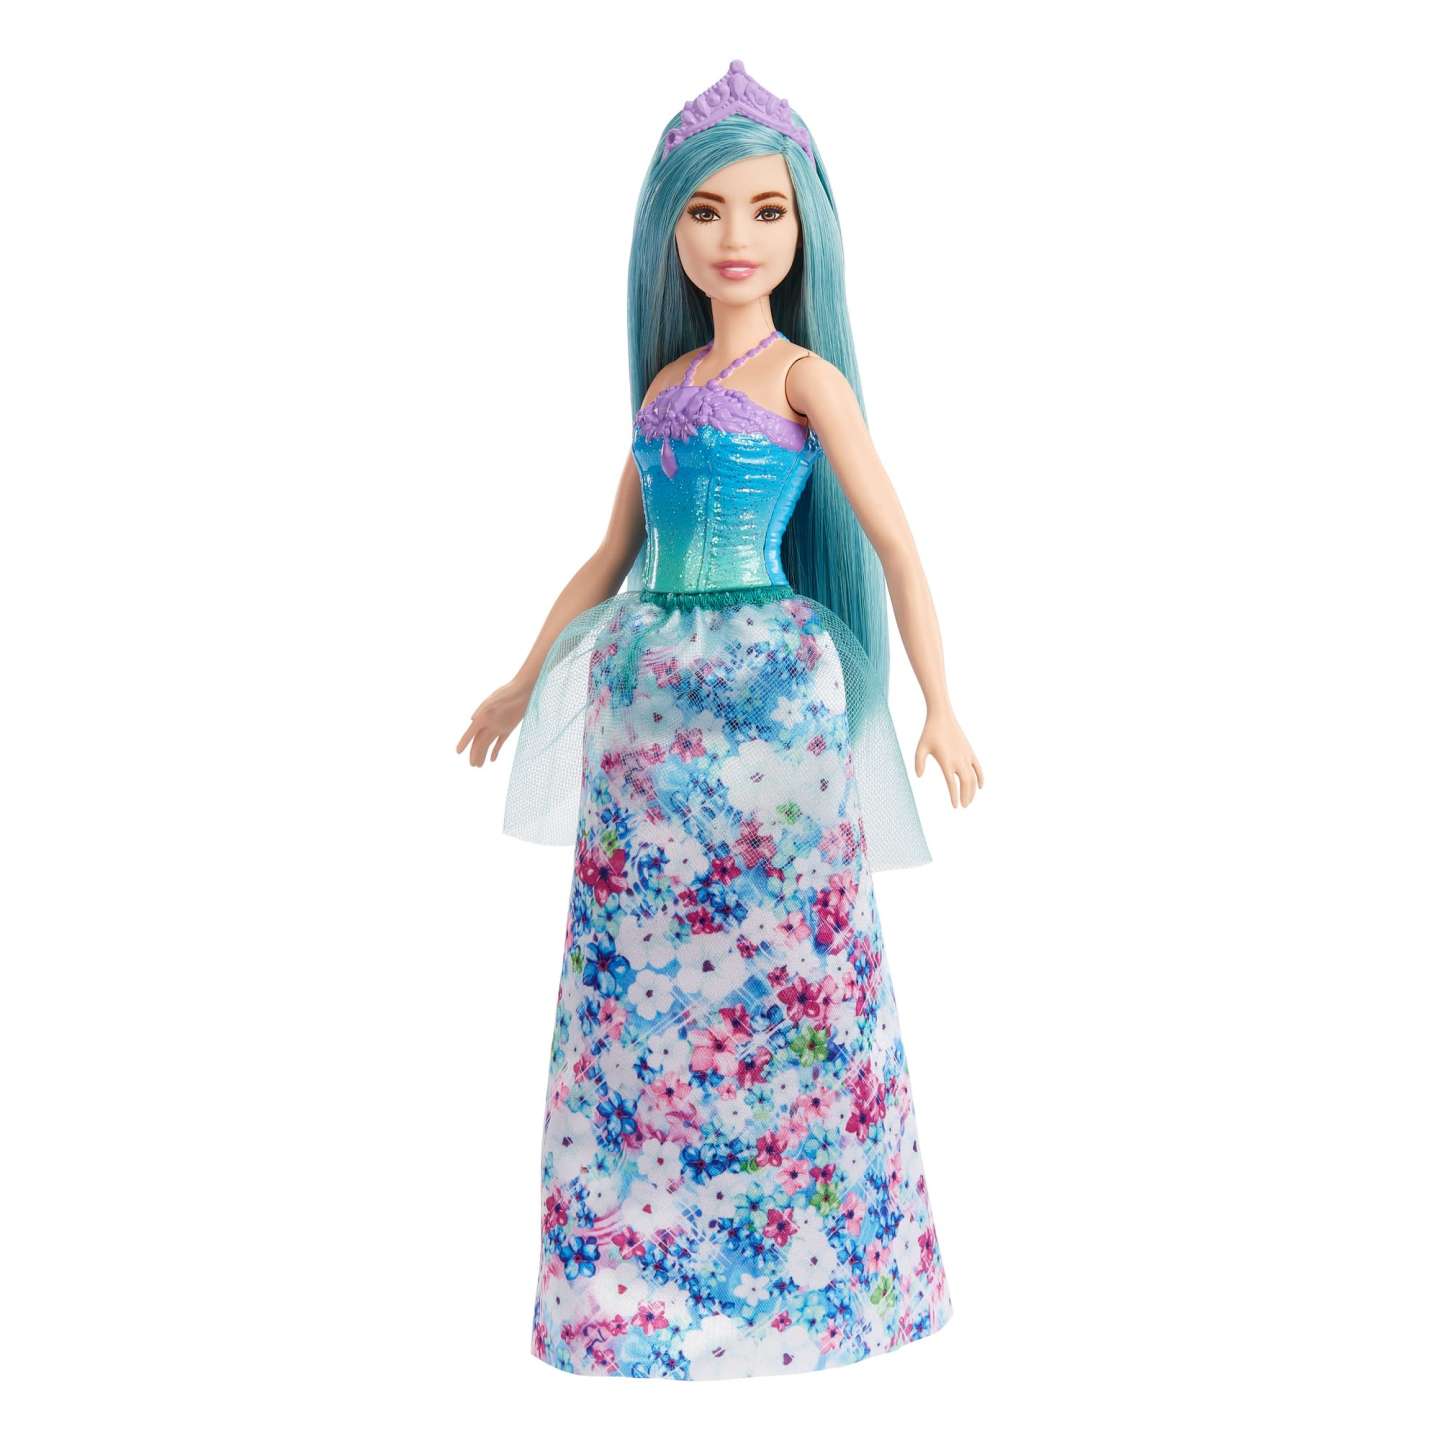 Barbie - Dreamtopia Royal Doll - Teal Hair (HGR16) - Leker